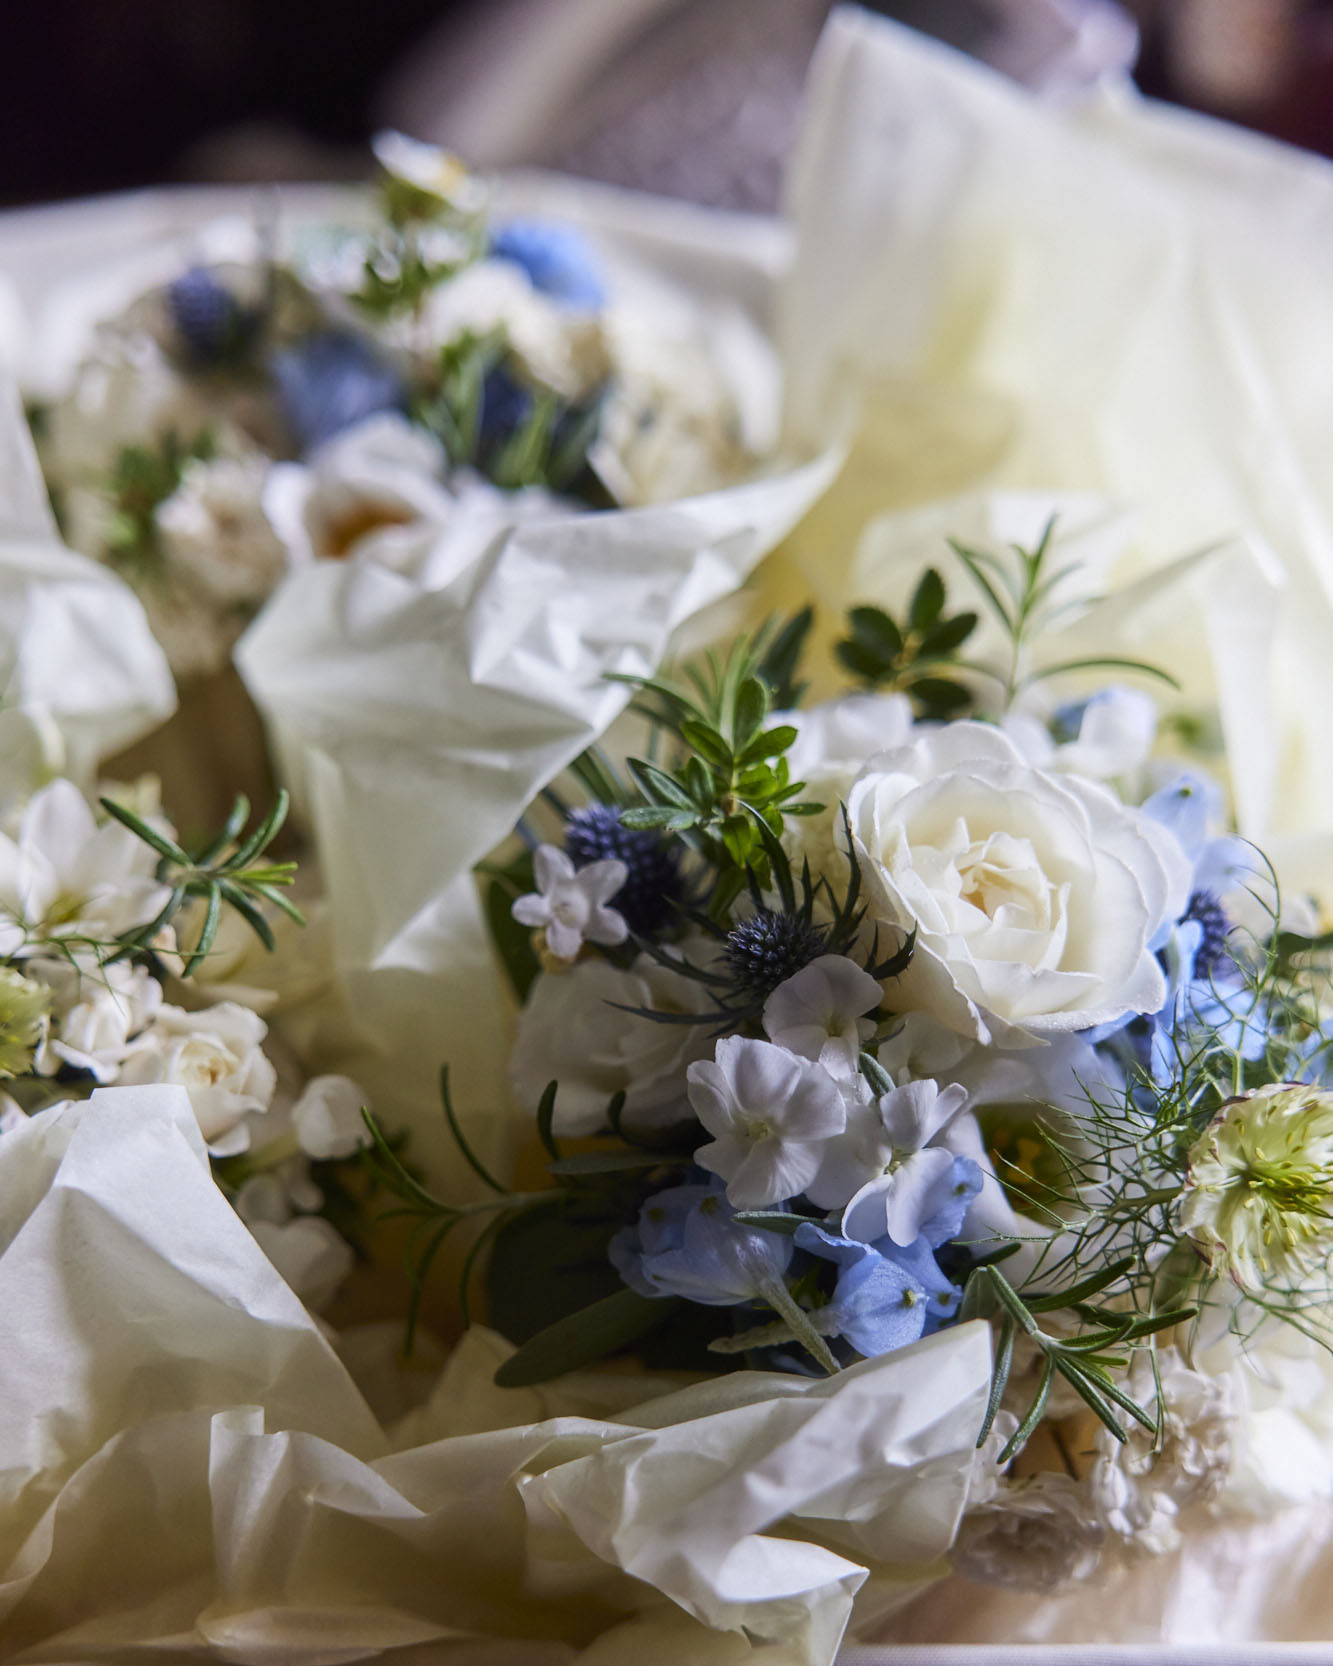 India Hicks's Wedding Party Flowers, junior bridesmaid bouquets